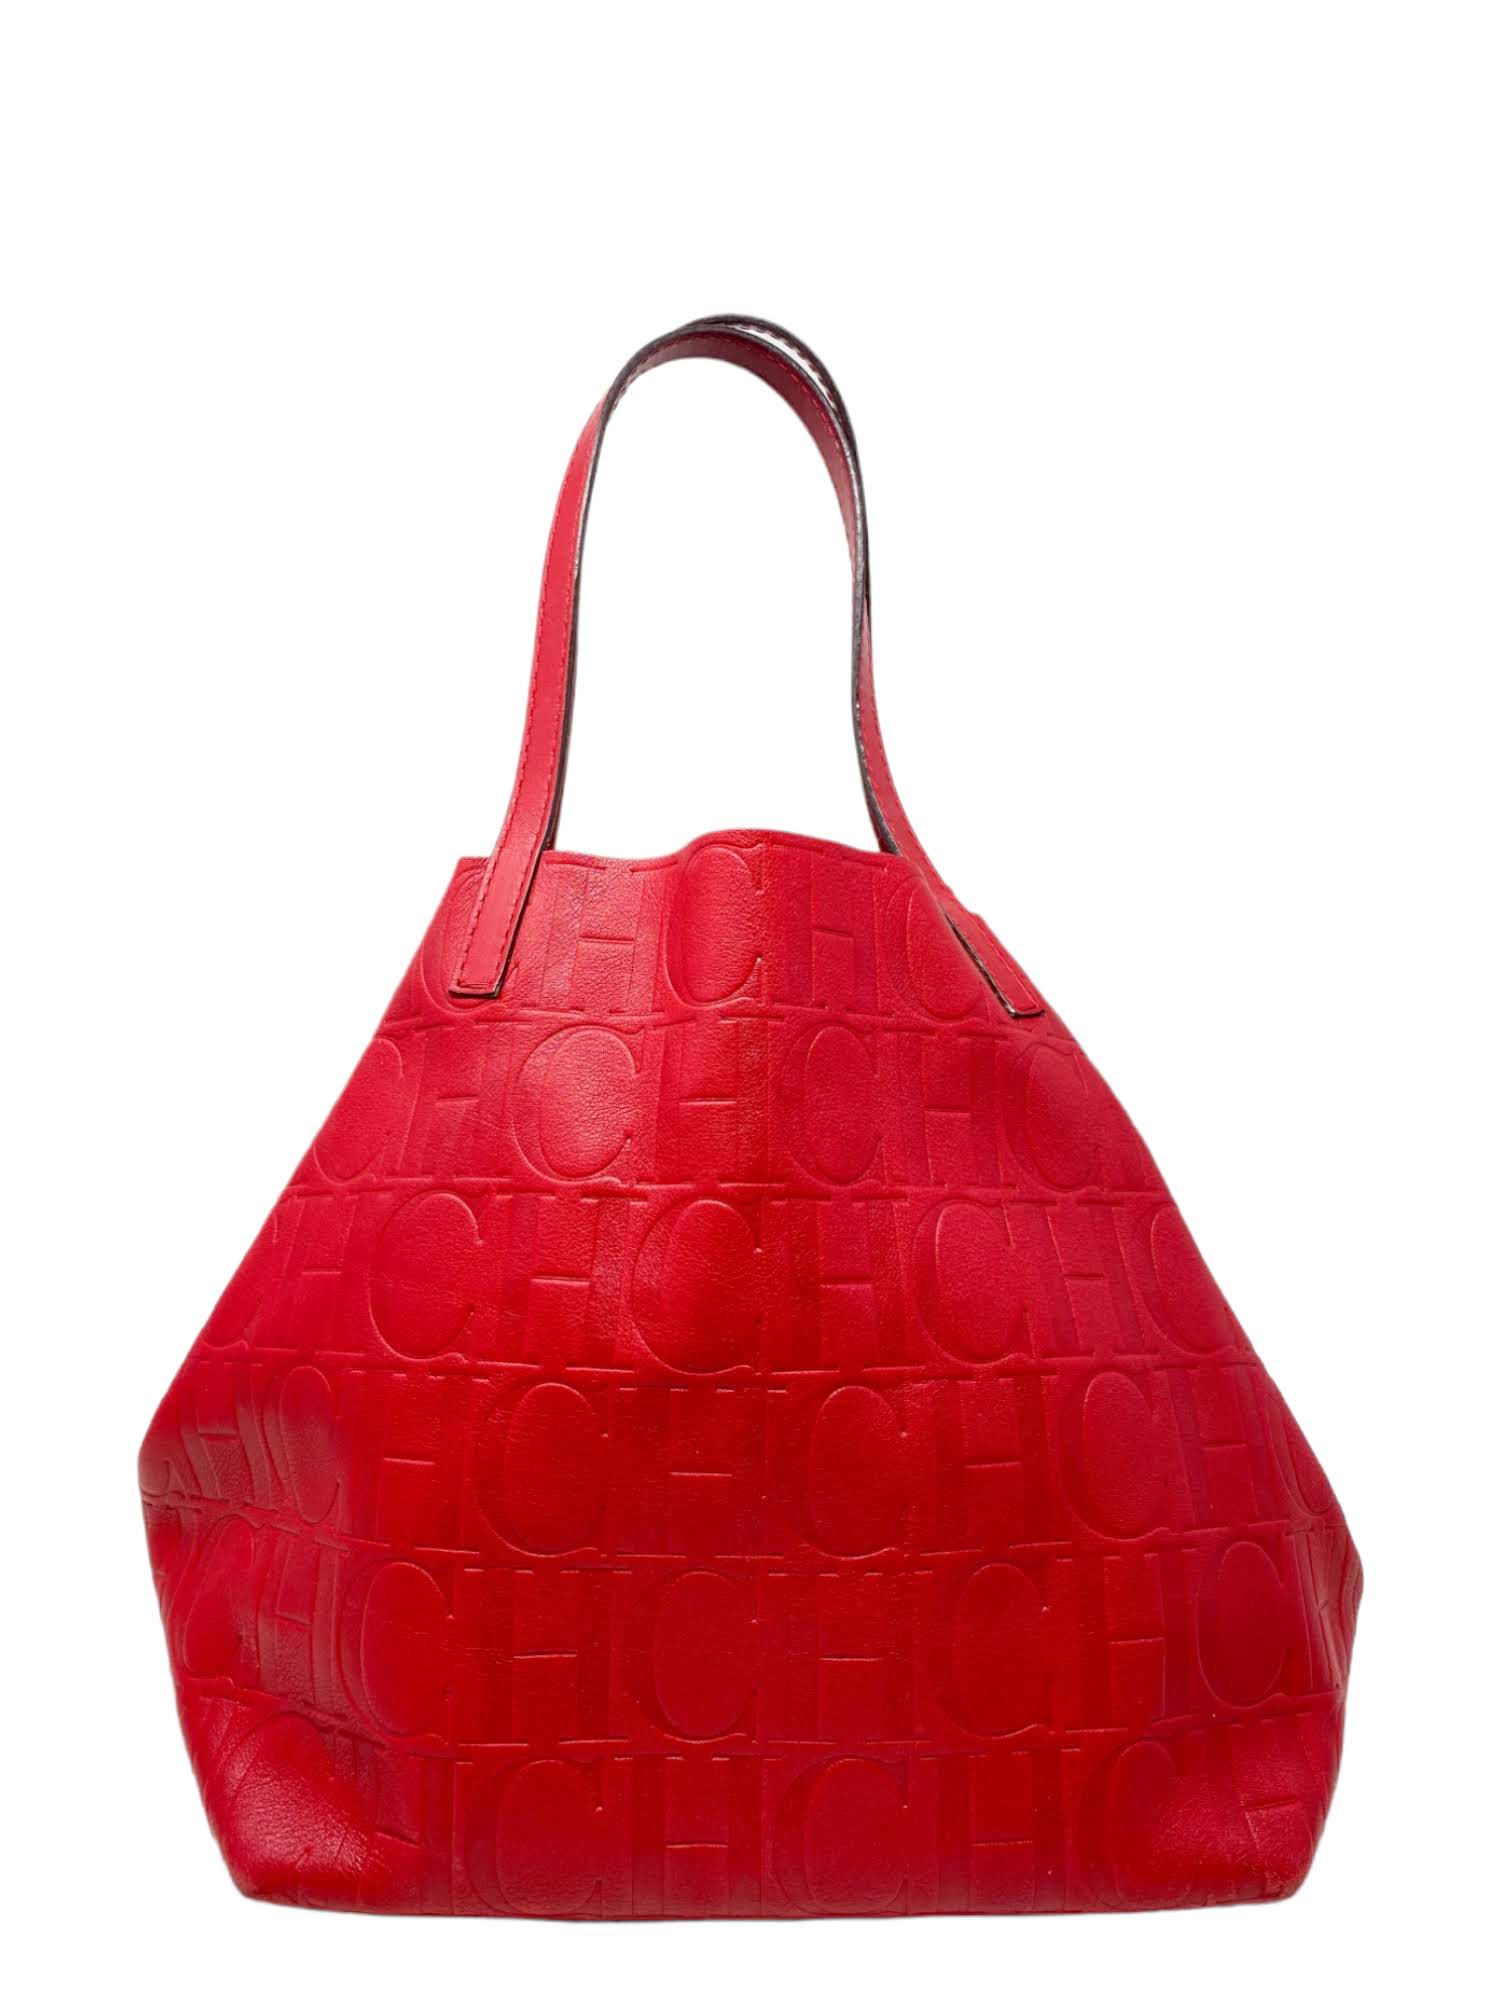 Louis Vuitton Portofino Pink Damier Azur Summer Trunks Neverfull mm Tote Bag